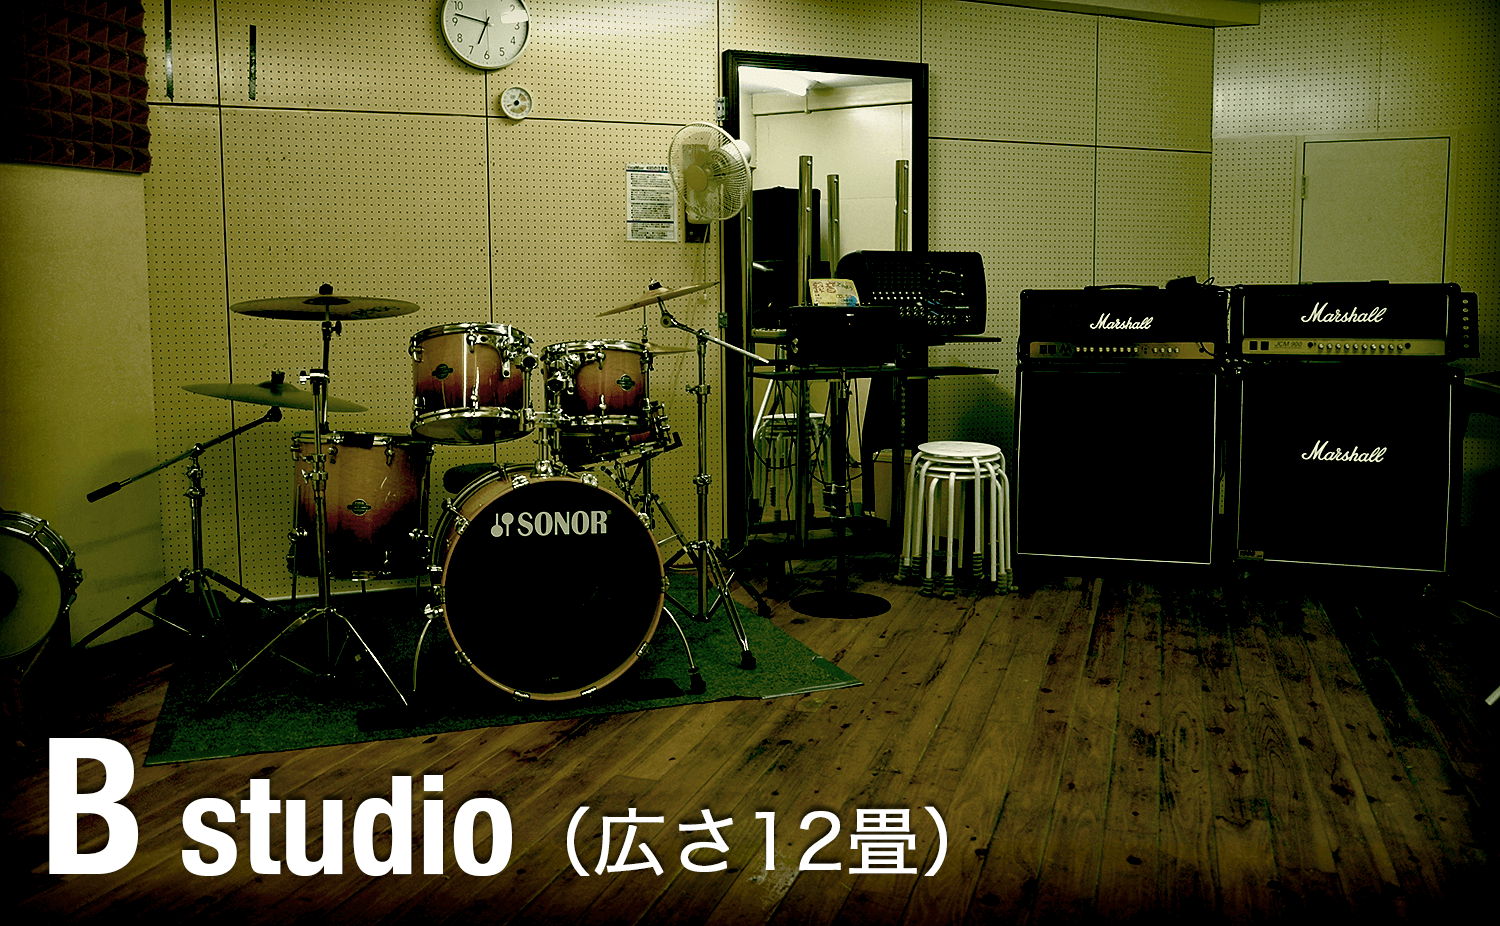 STUDIO O&K 三島店 Bスタジオ